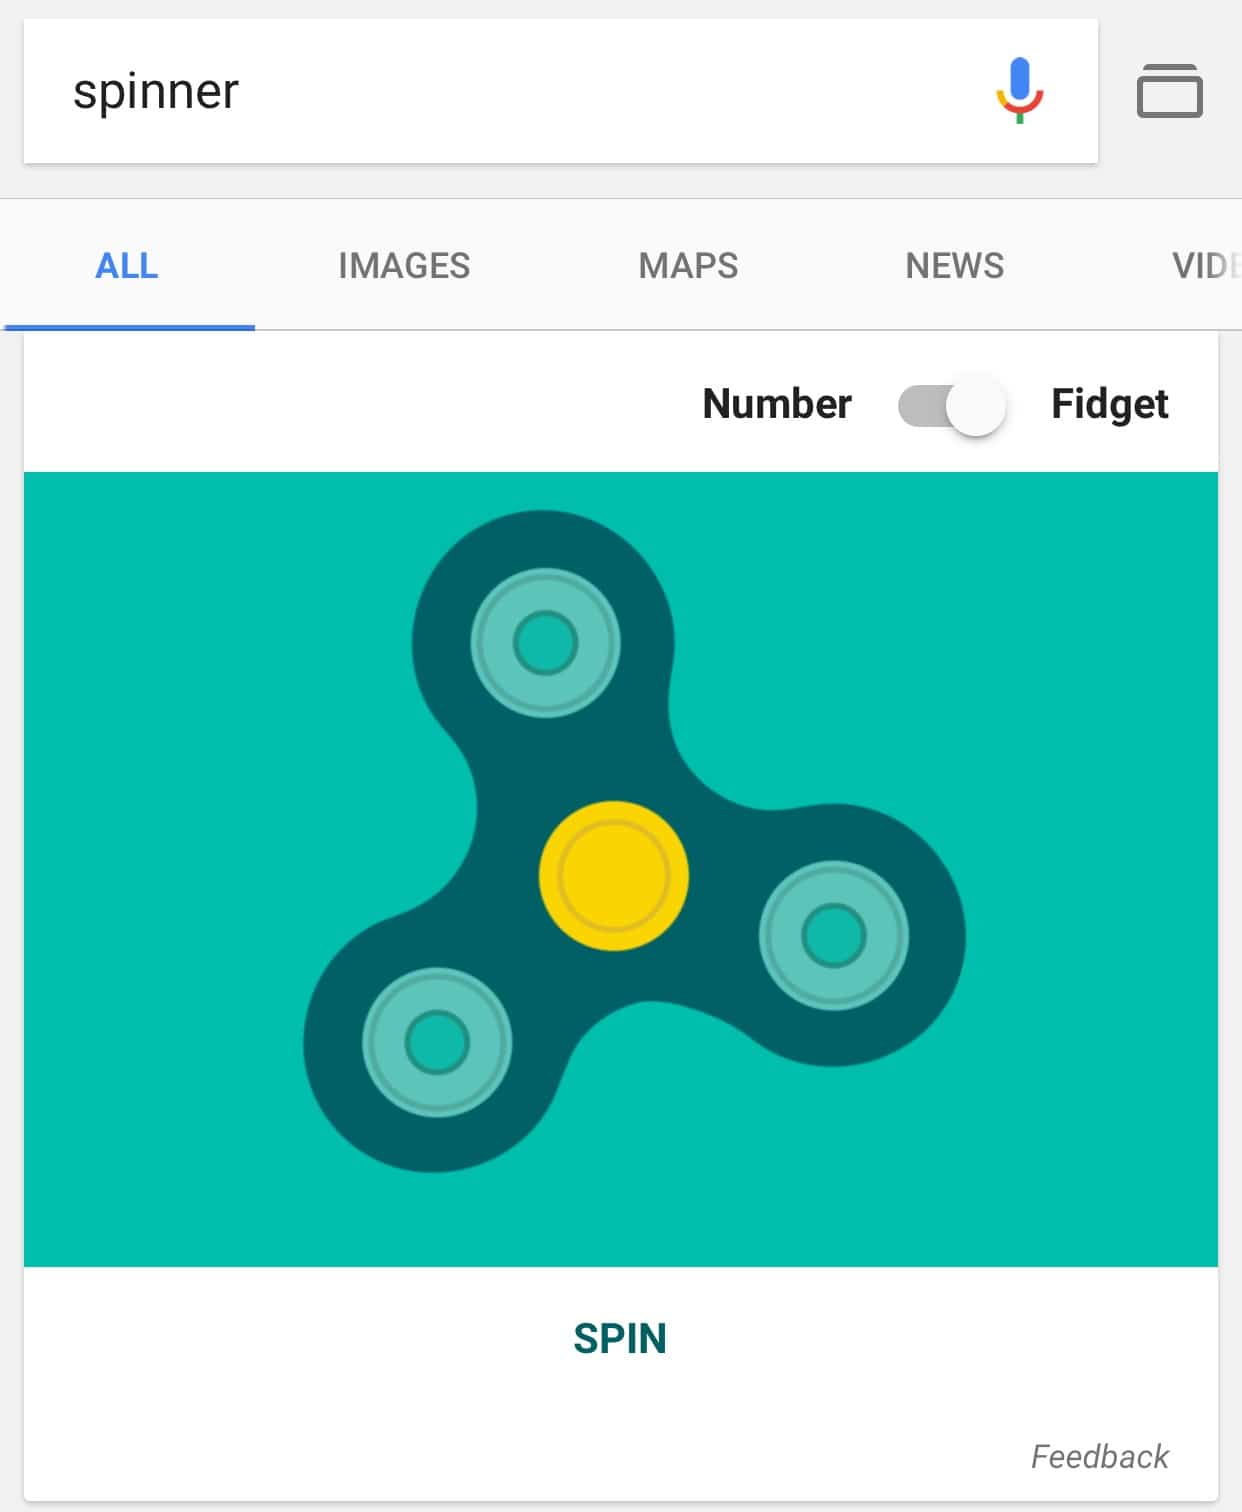 Google Catches Fidget Spinner Fever, Has One as an Easter Egg